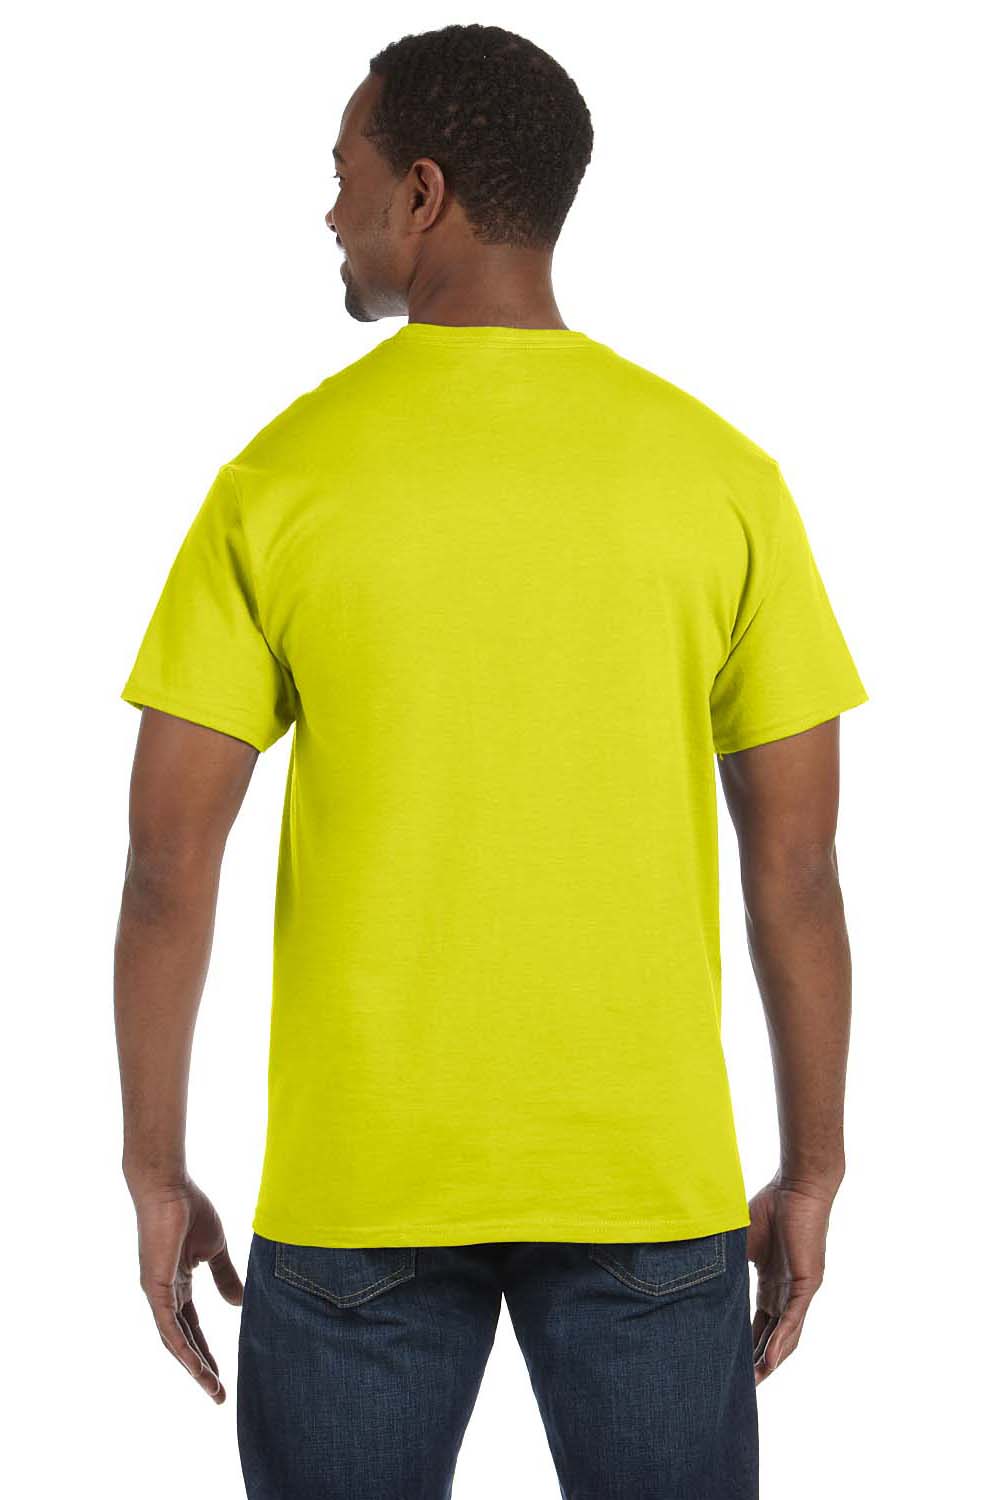 Hanes 5250T Mens ComfortSoft Short Sleeve Crewneck T-Shirt Safety Green Back